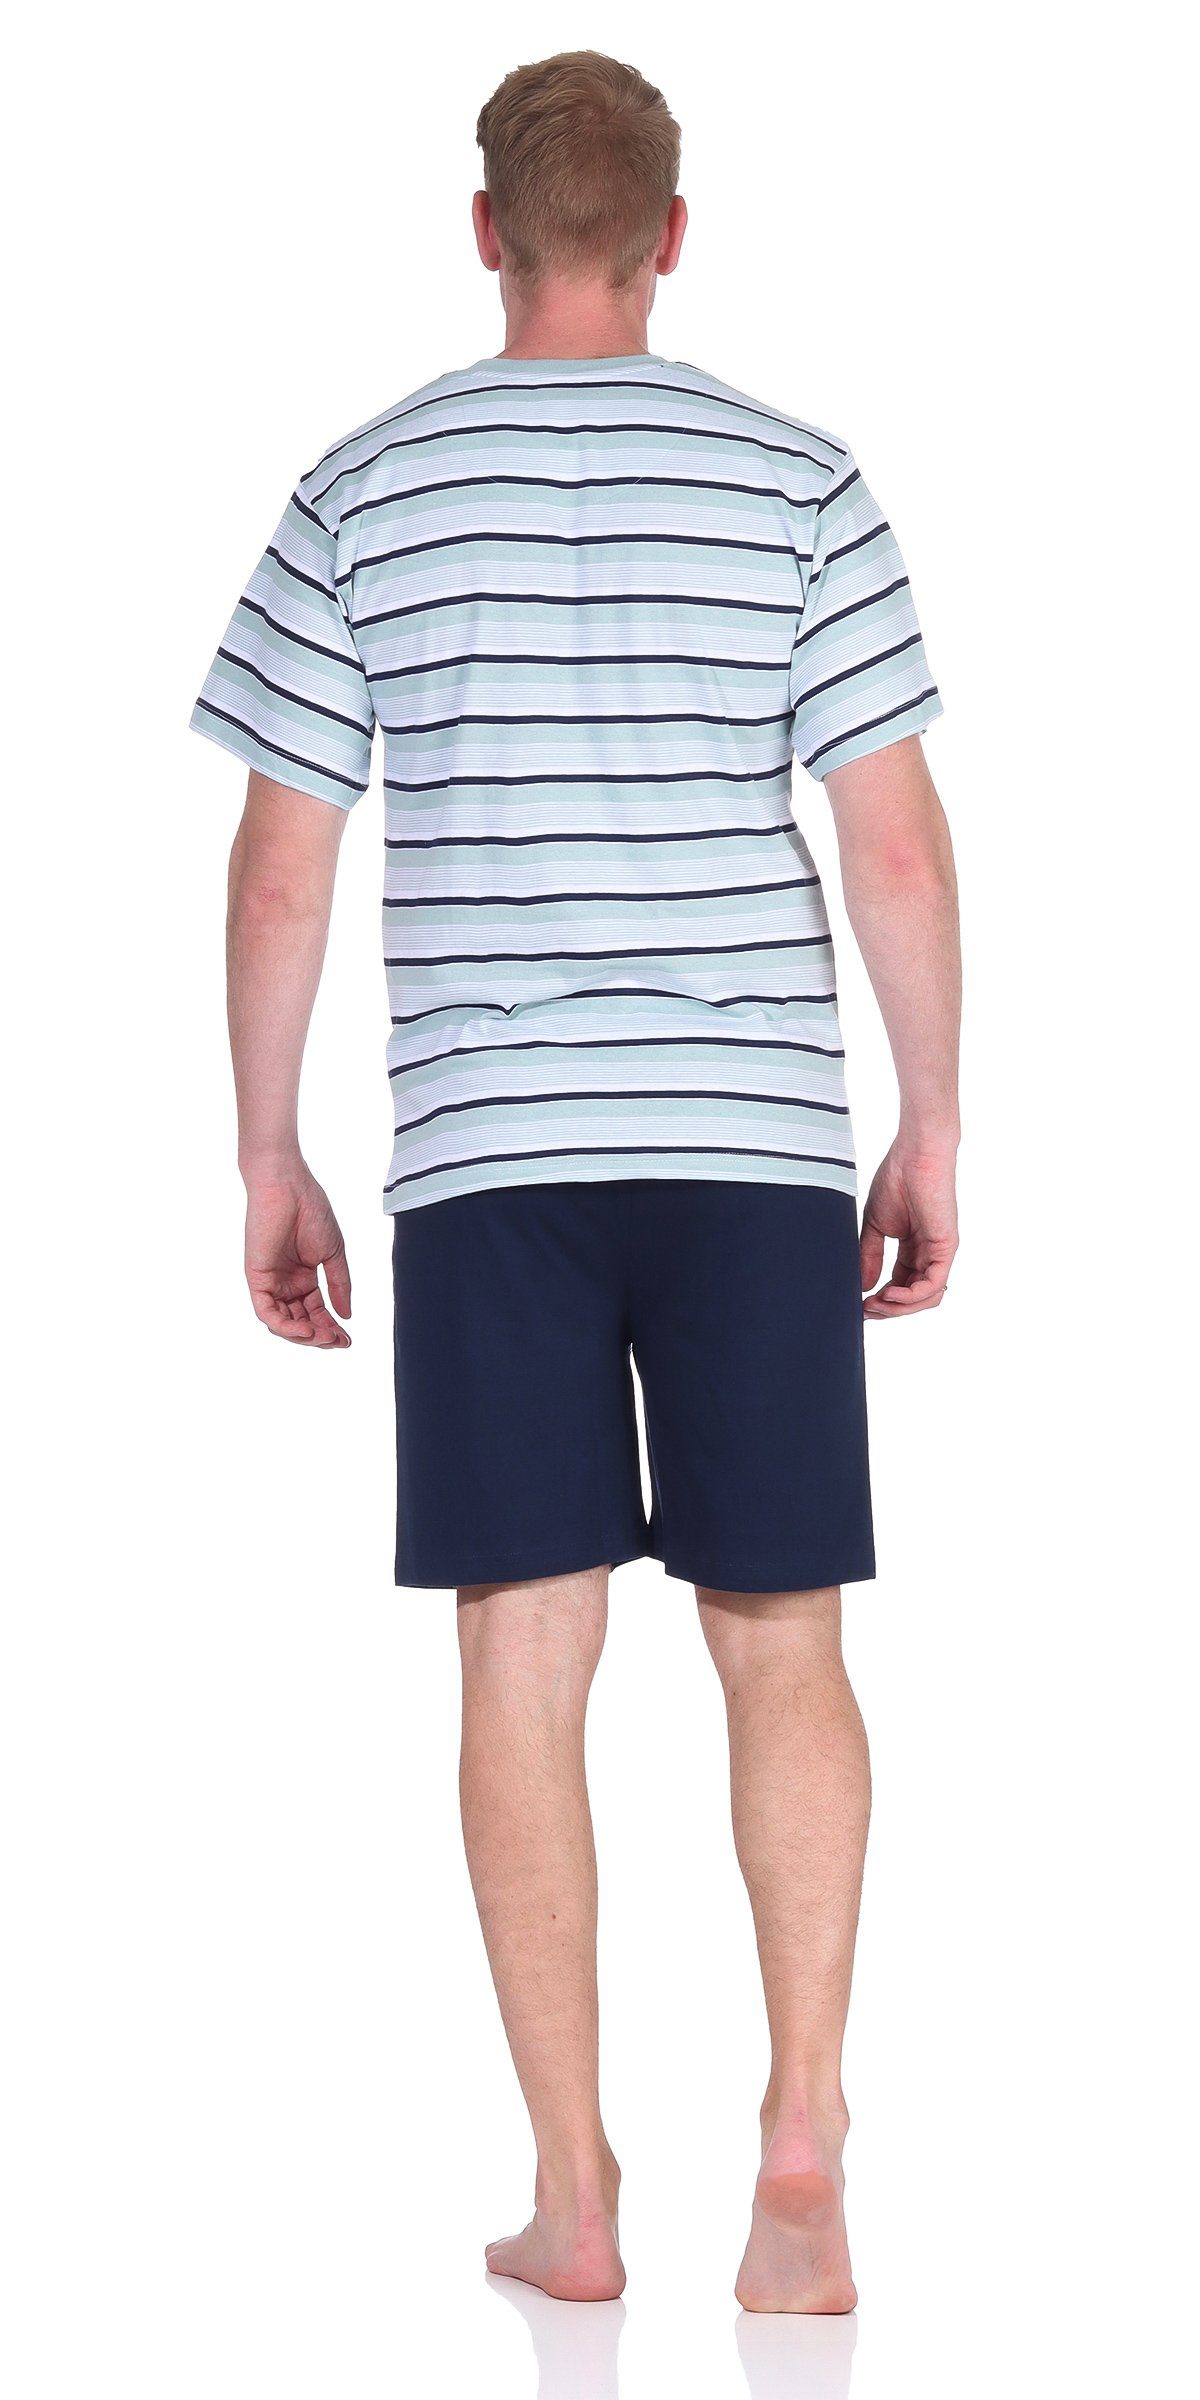 Moonline Shorty Herren Schlafanzug V-Ausschnitt Single-Jersey Shorty Aqua mit Baumwolle 100% Kurzarm